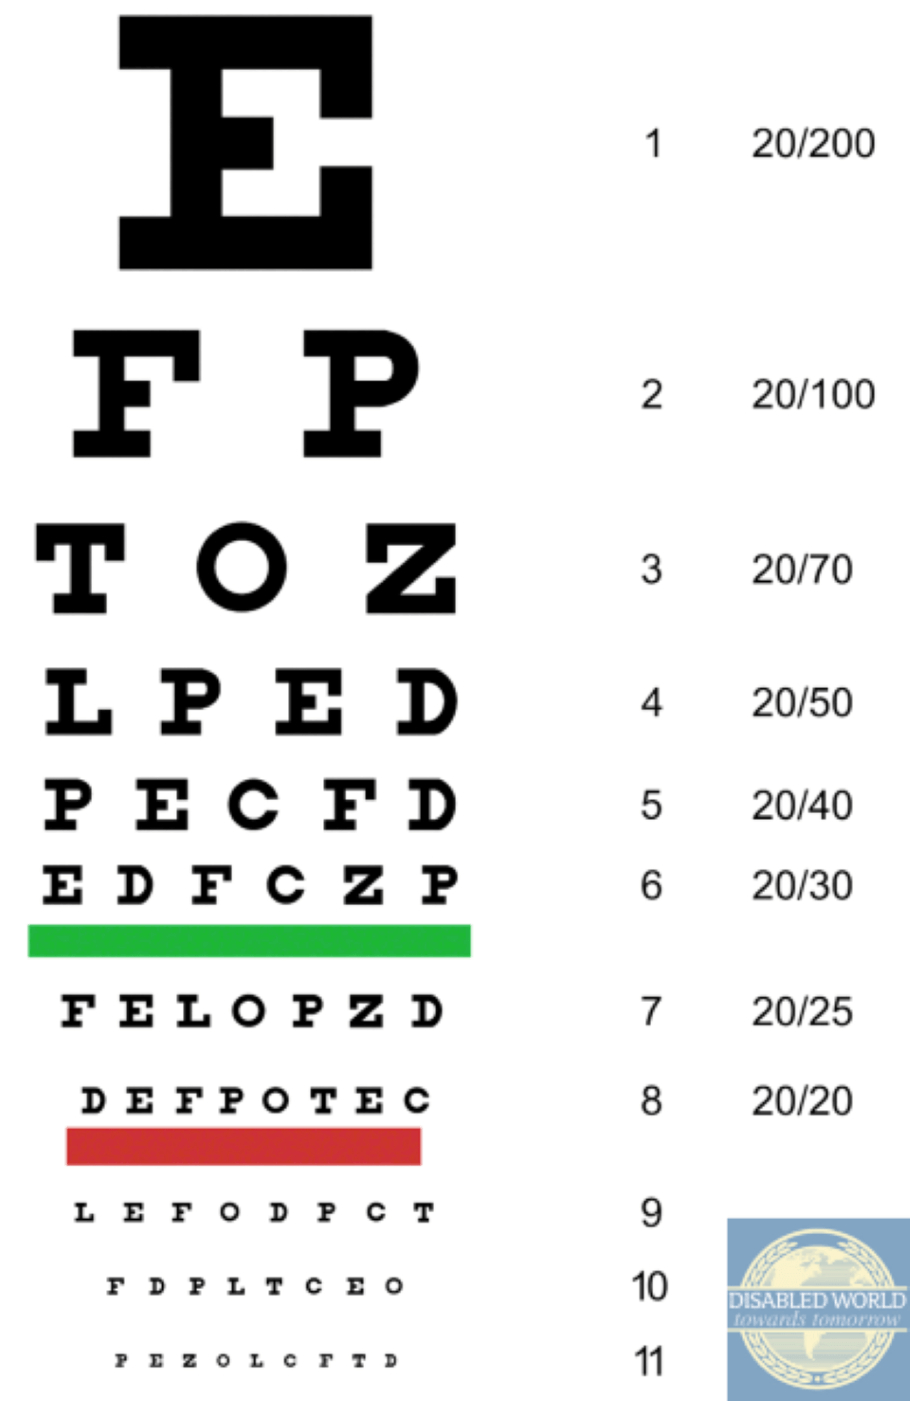 Printable Snellen Eye Charts | Disabled World regarding Eye Exam Chart Printable Free